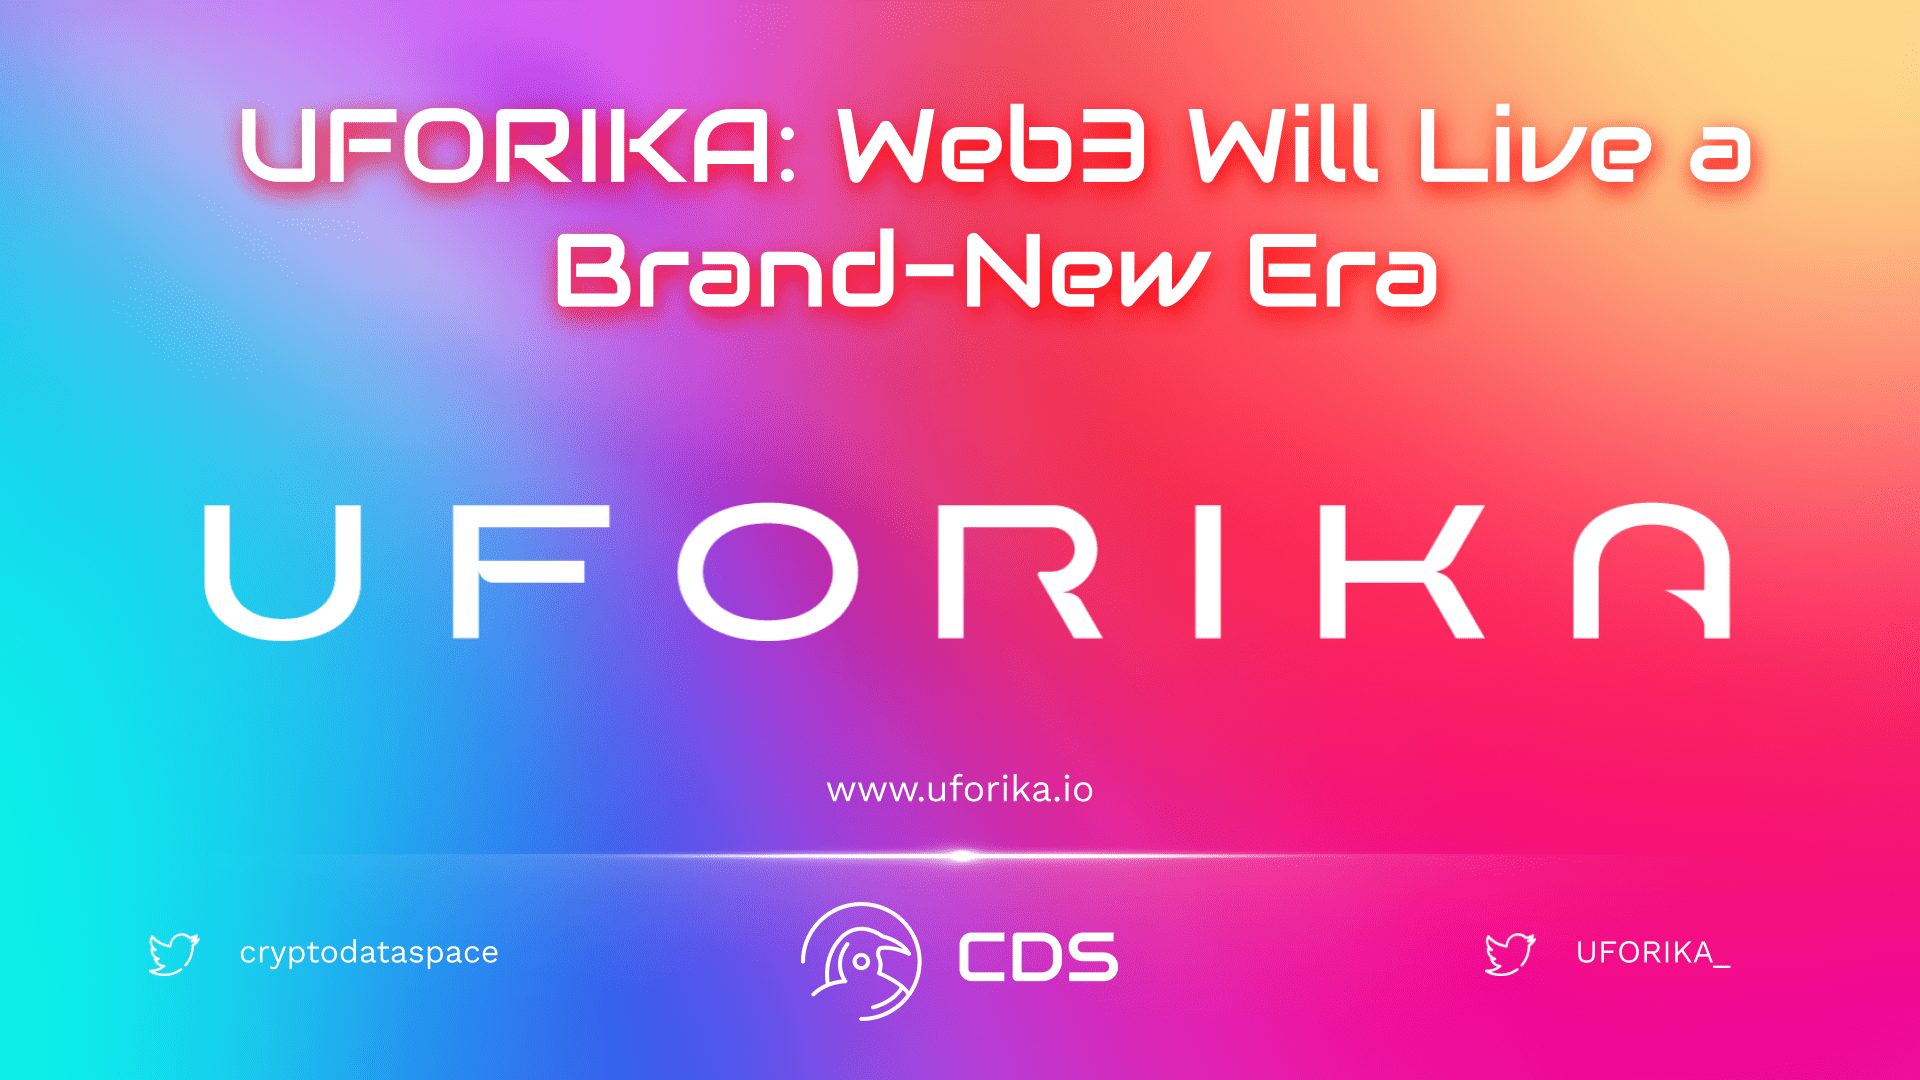 UFORIKA Web3 Will Live a Brand-New Era